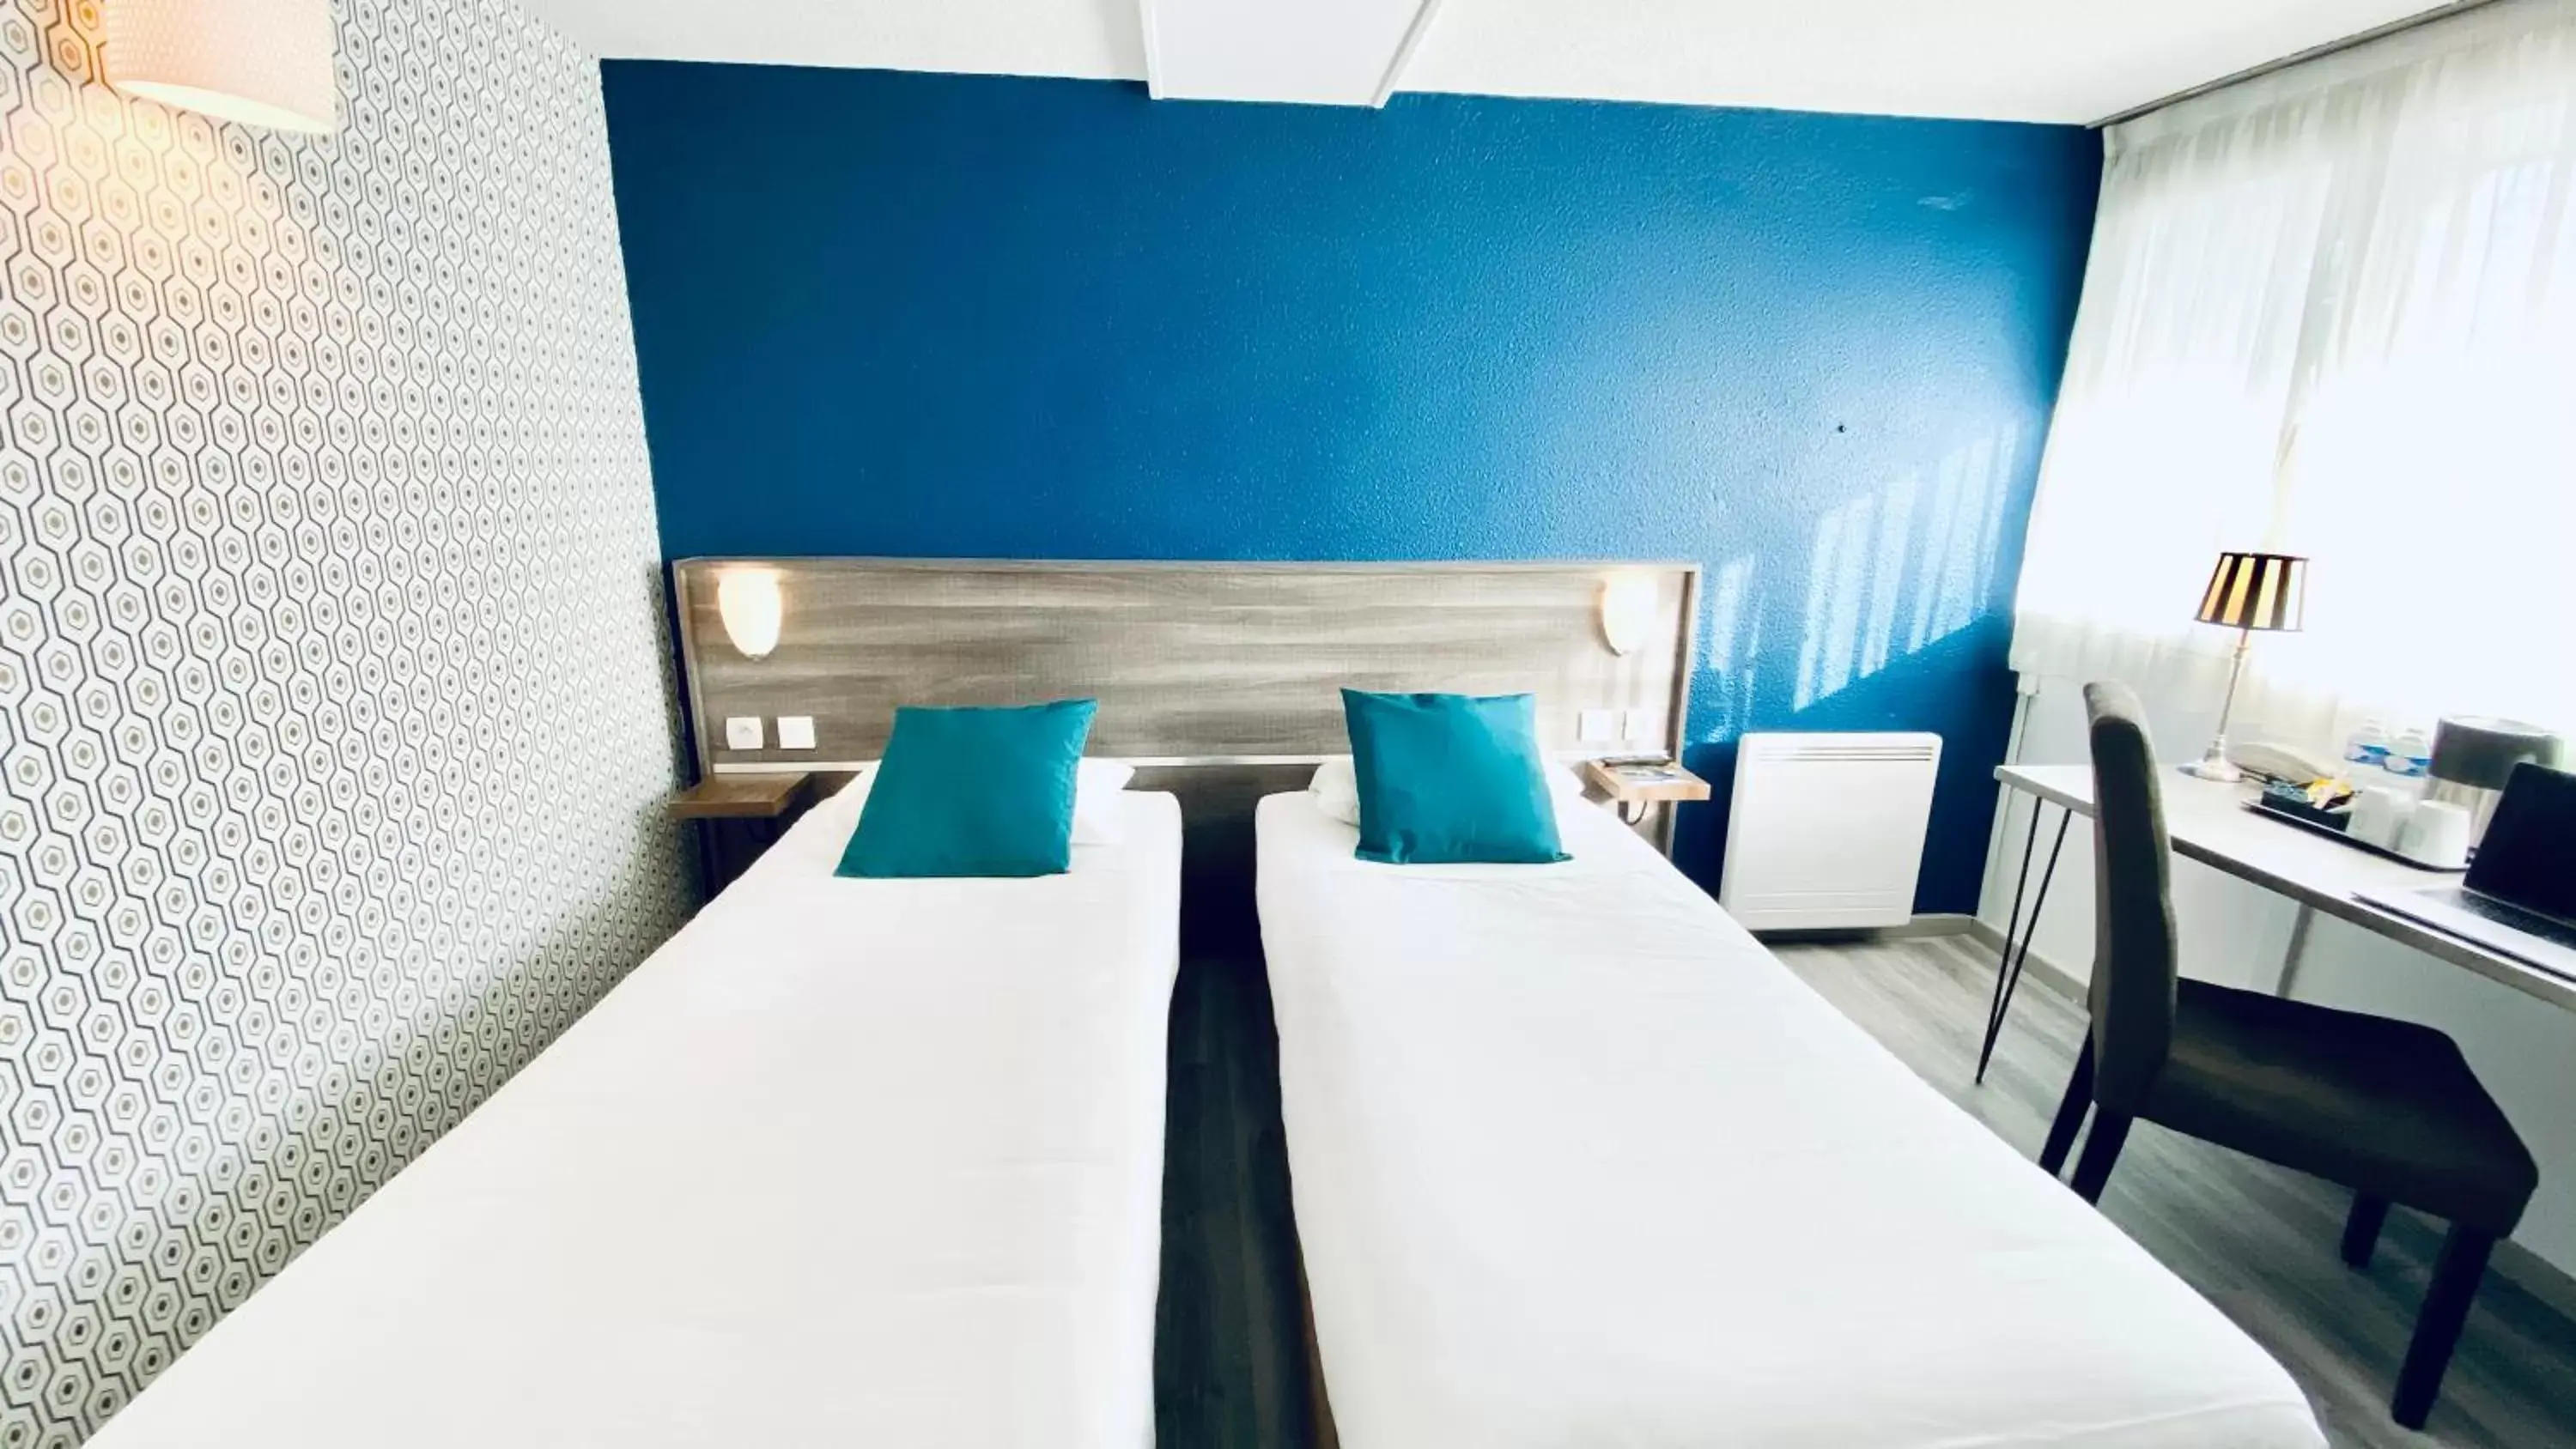 Bed in Hôtel Restaurant Kyriad de Péronne